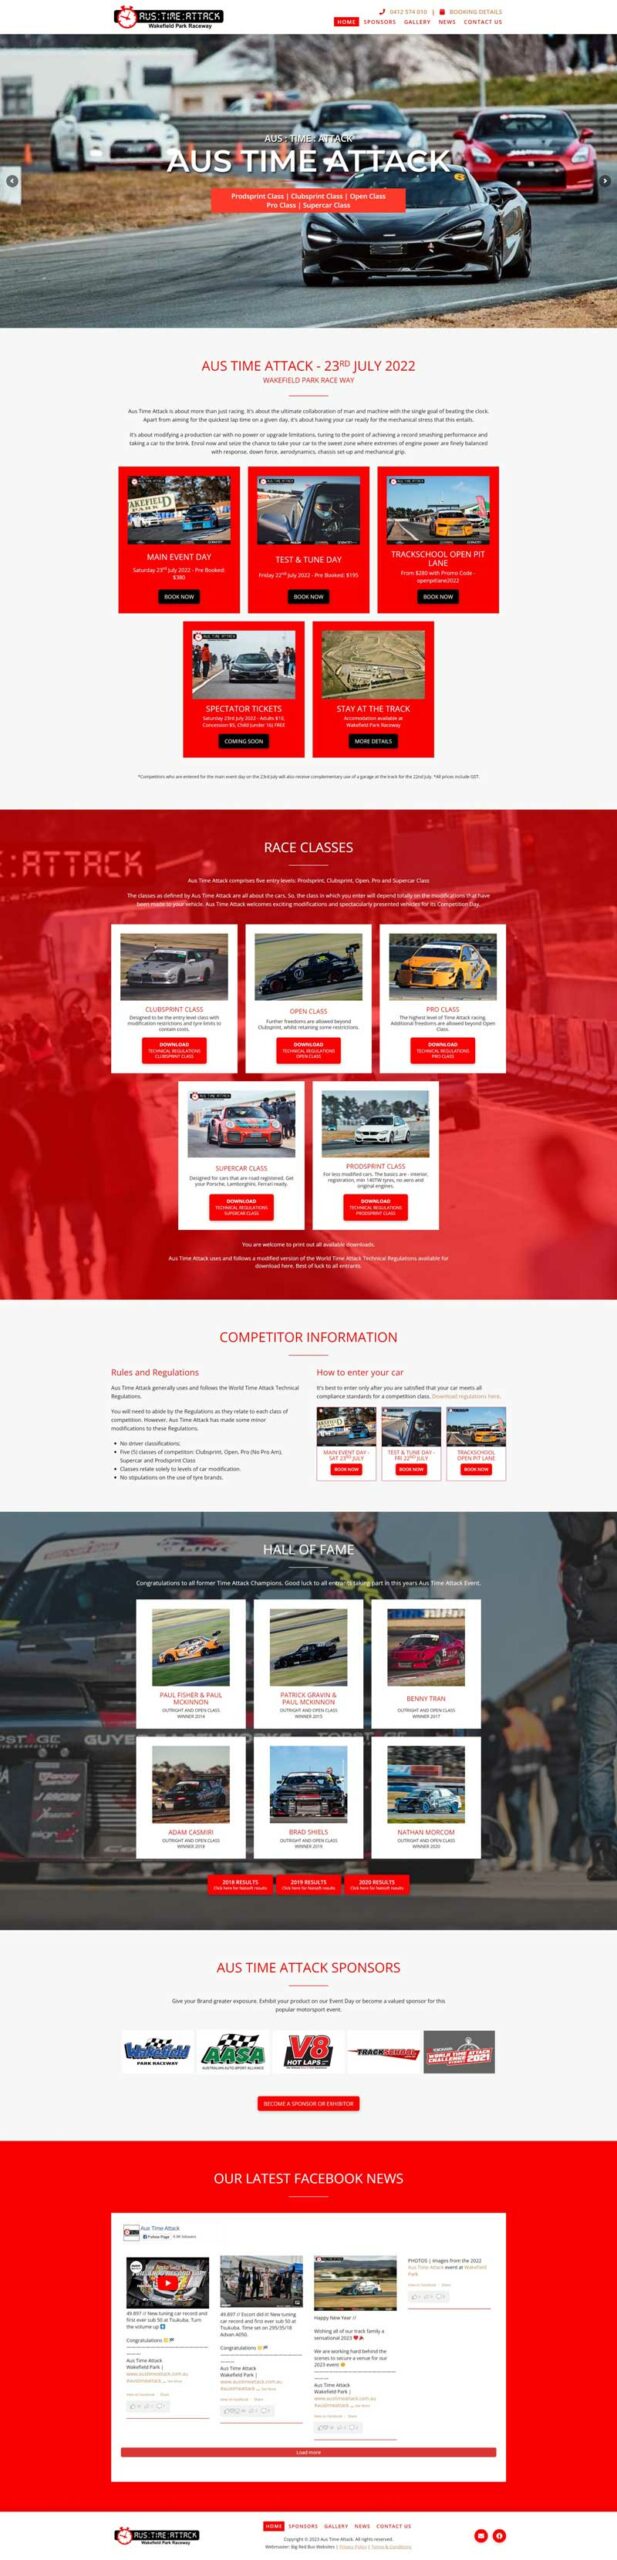 Aus Time Attack website designed by Big Red Bus Websites - ezample 1